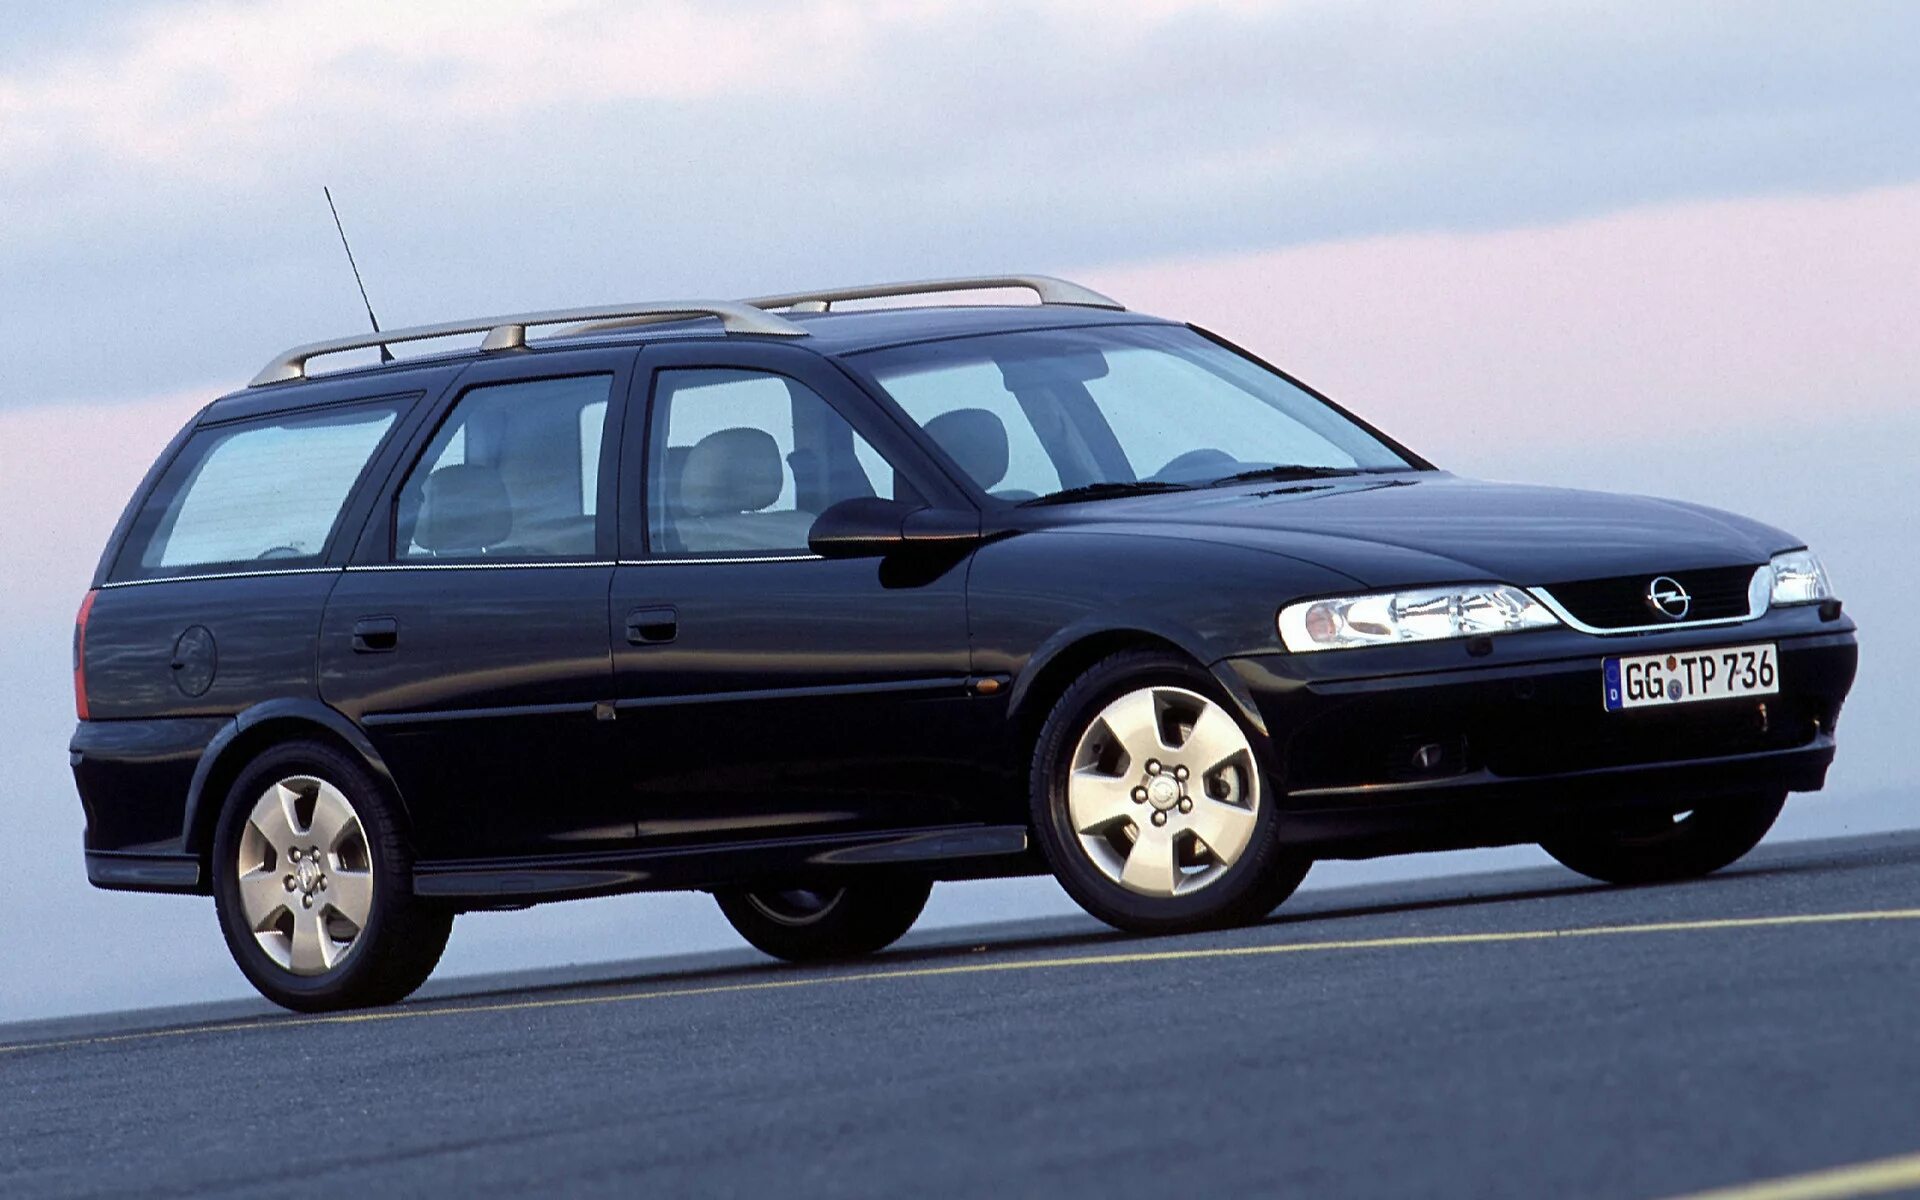 Opel Vectra 2000 универсал. Opel Vectra b 2001 универсал. Opel Vectra b 1998 универсал. Opel Vectra b универсал 2002.